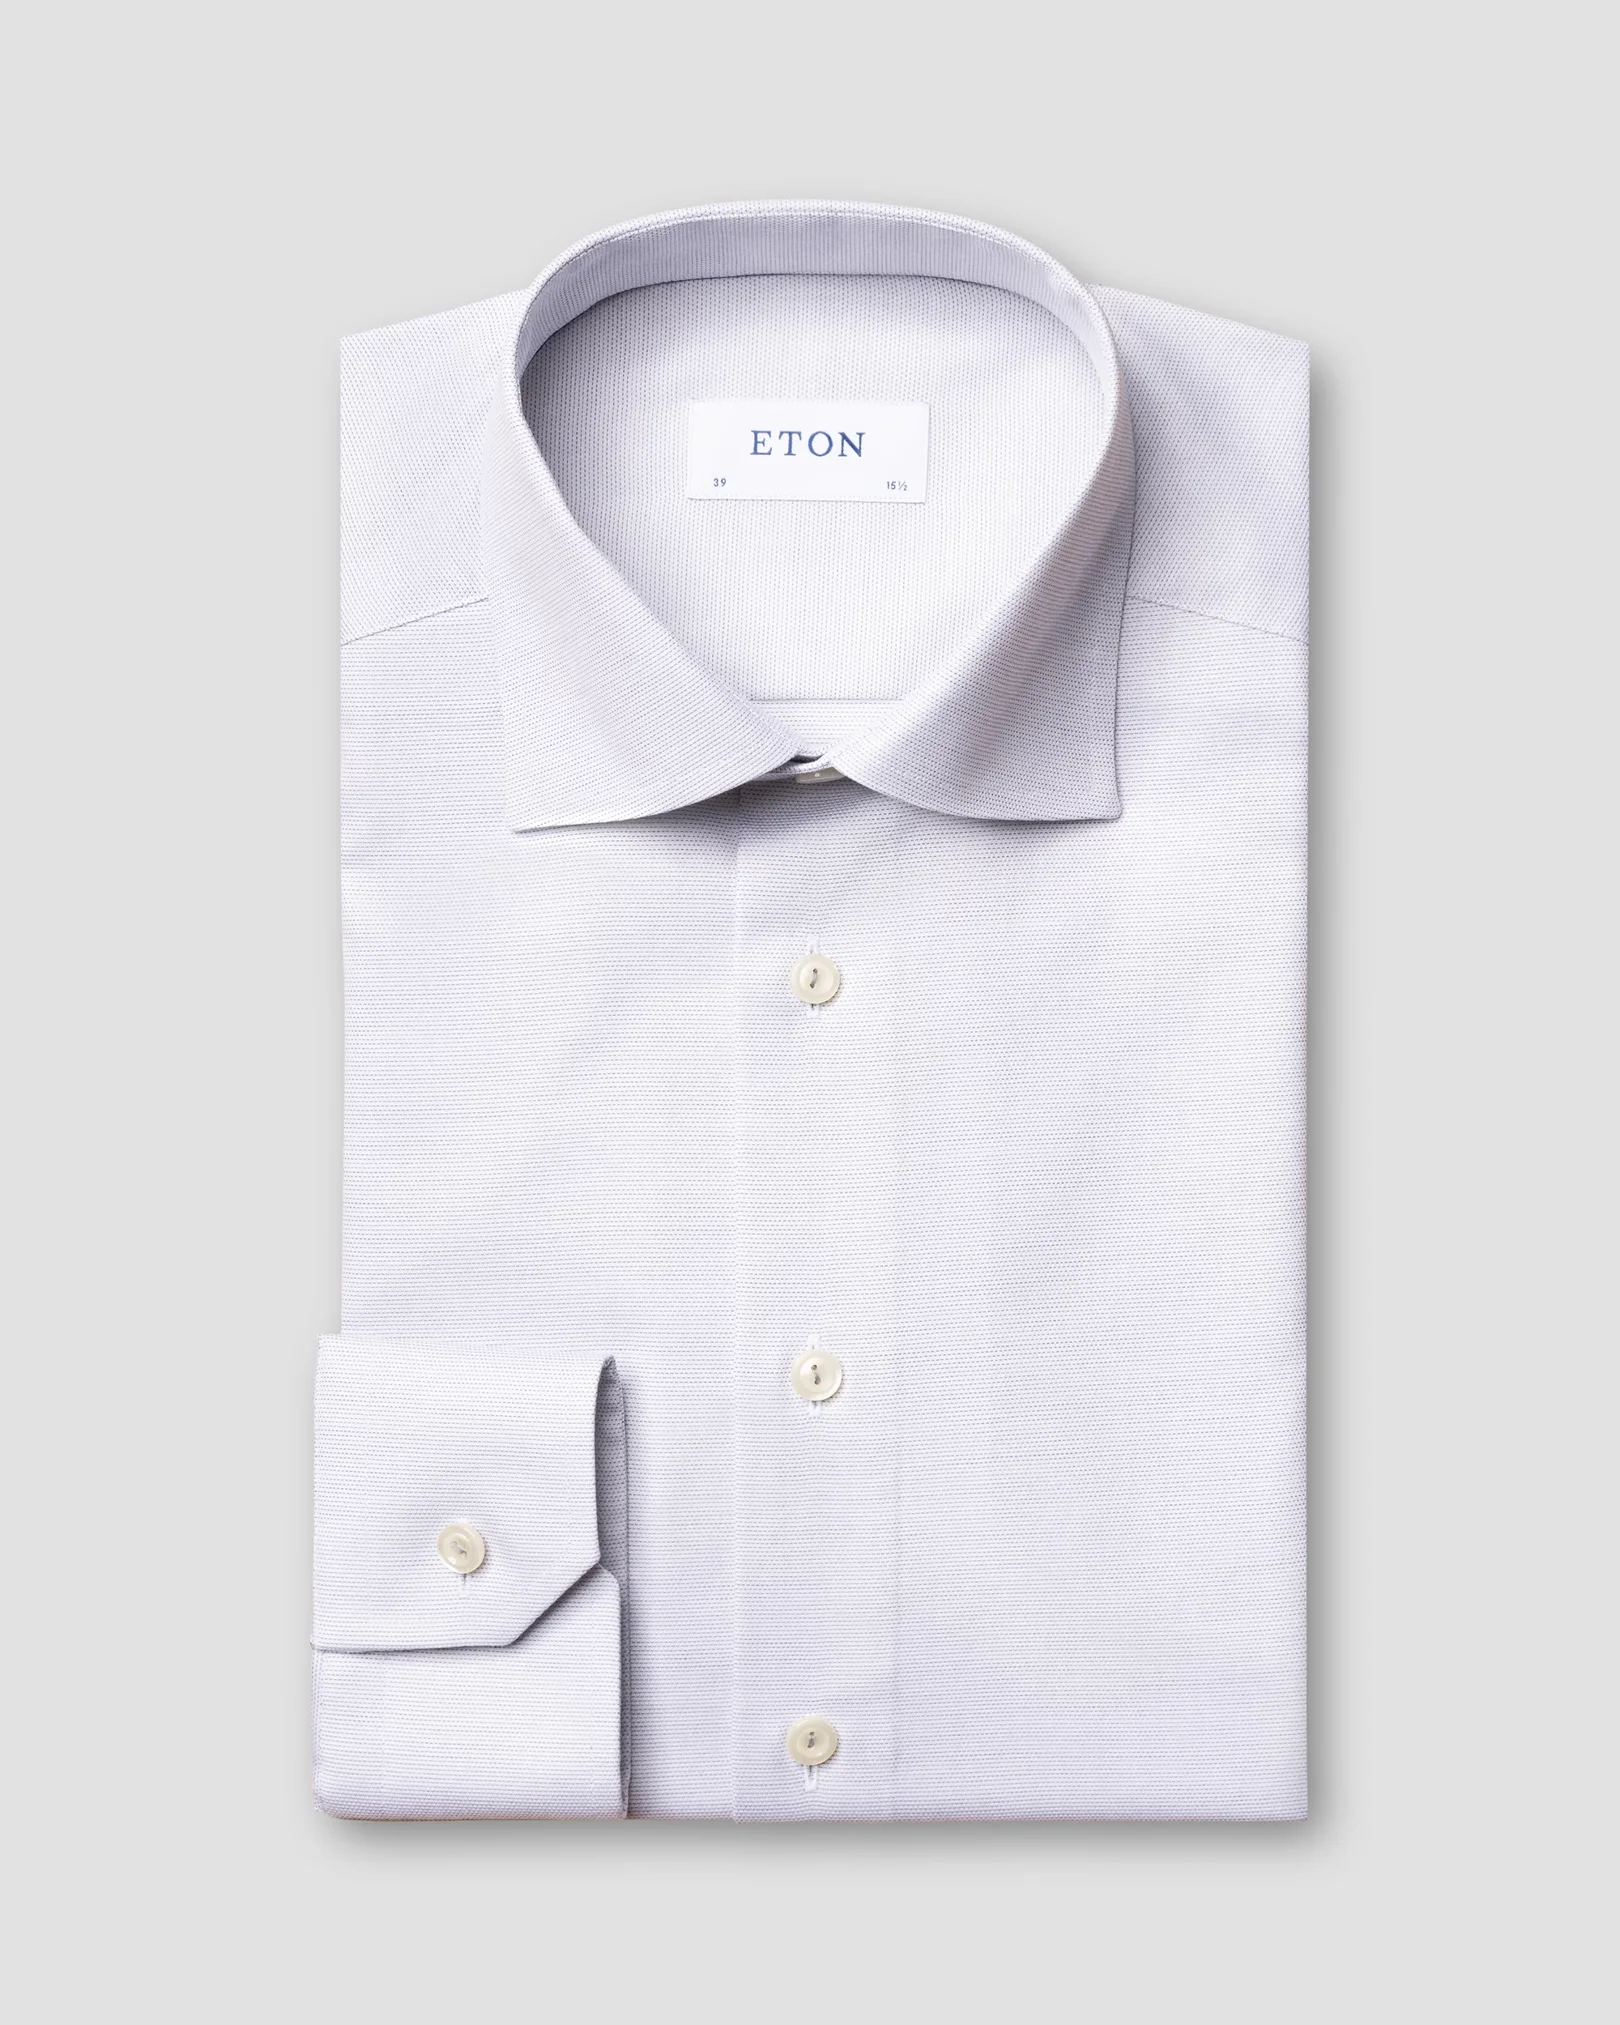 Eton - gray pin dot shirt cut away single contemporary